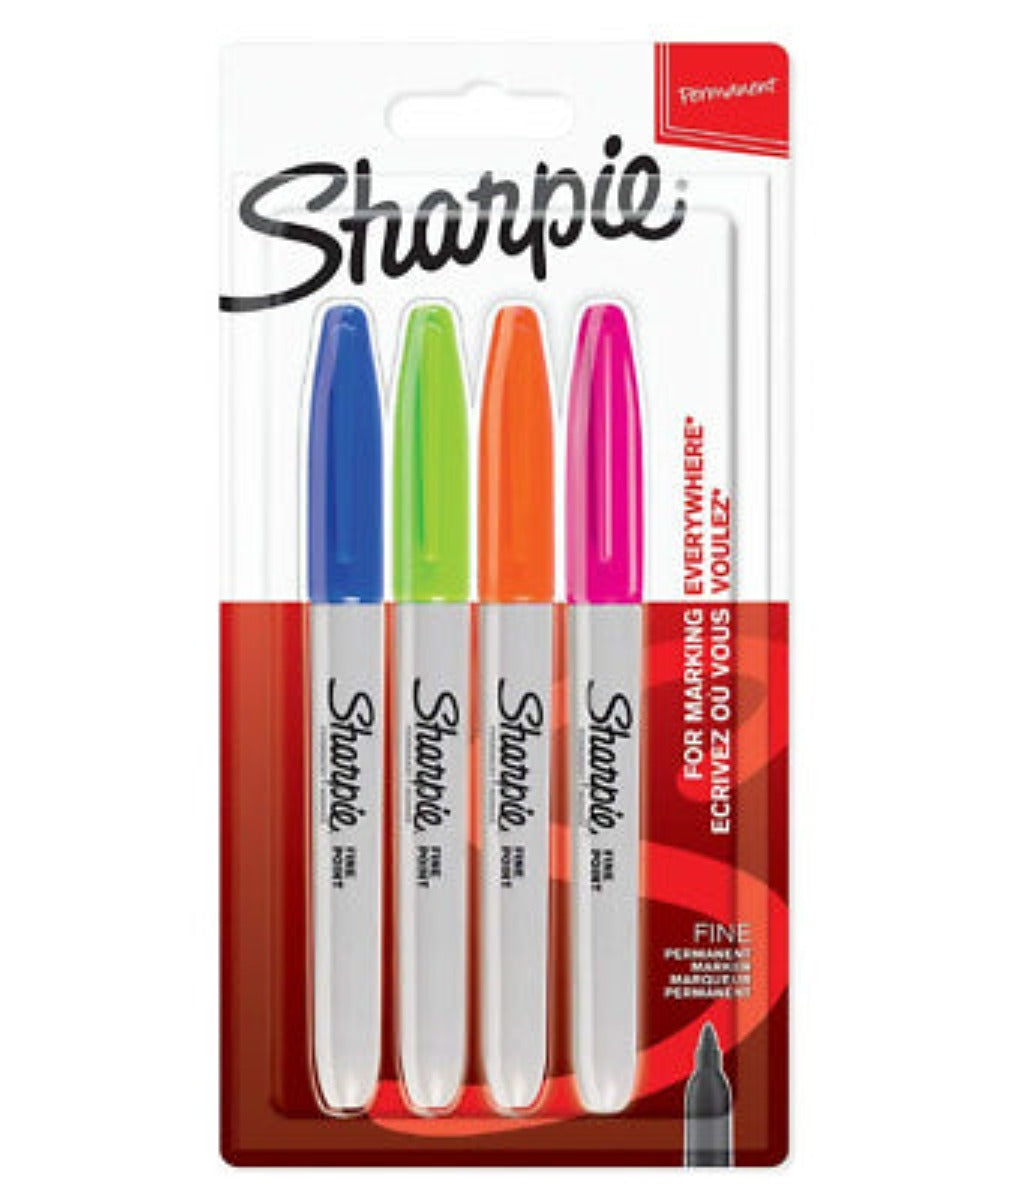 Sharpie Fine Point Permanent Markers 4 Colors Deep || الوان ماركر الثابته من شاربي 4 لون غامق